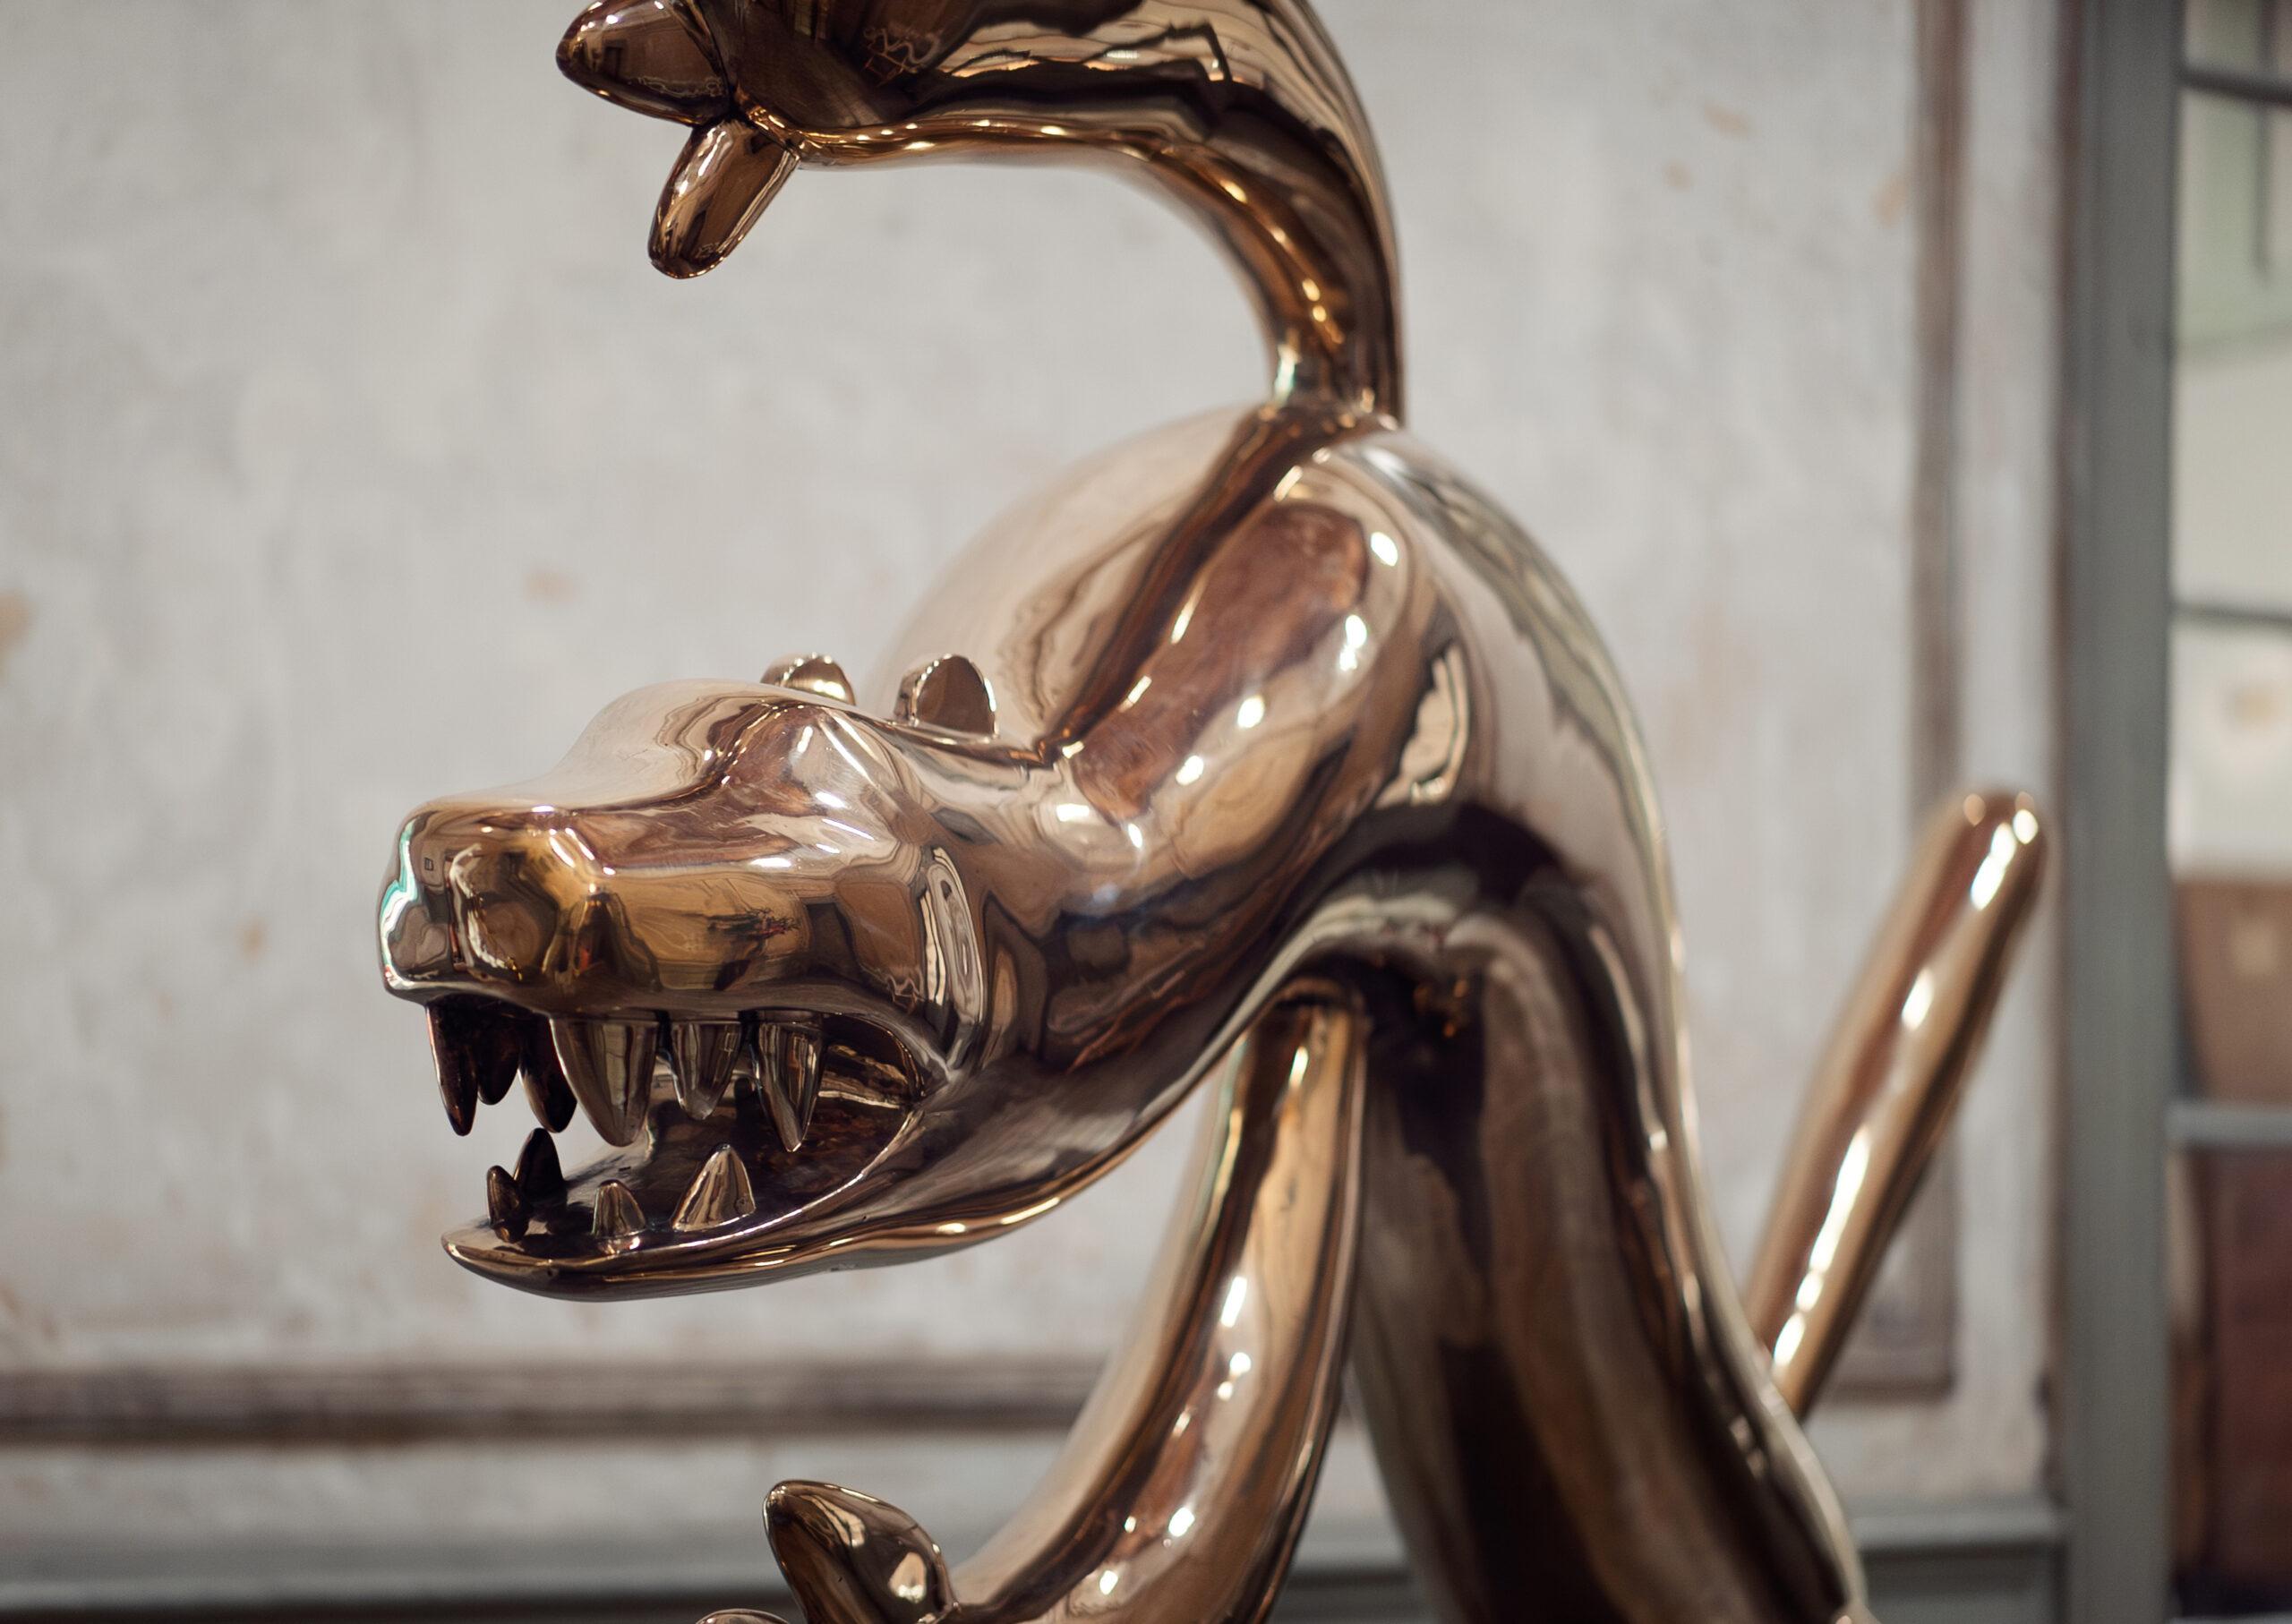 Tiger by Marcelo Martin Burgos - Polished bronze sculpture, golden, wild cat For Sale 6